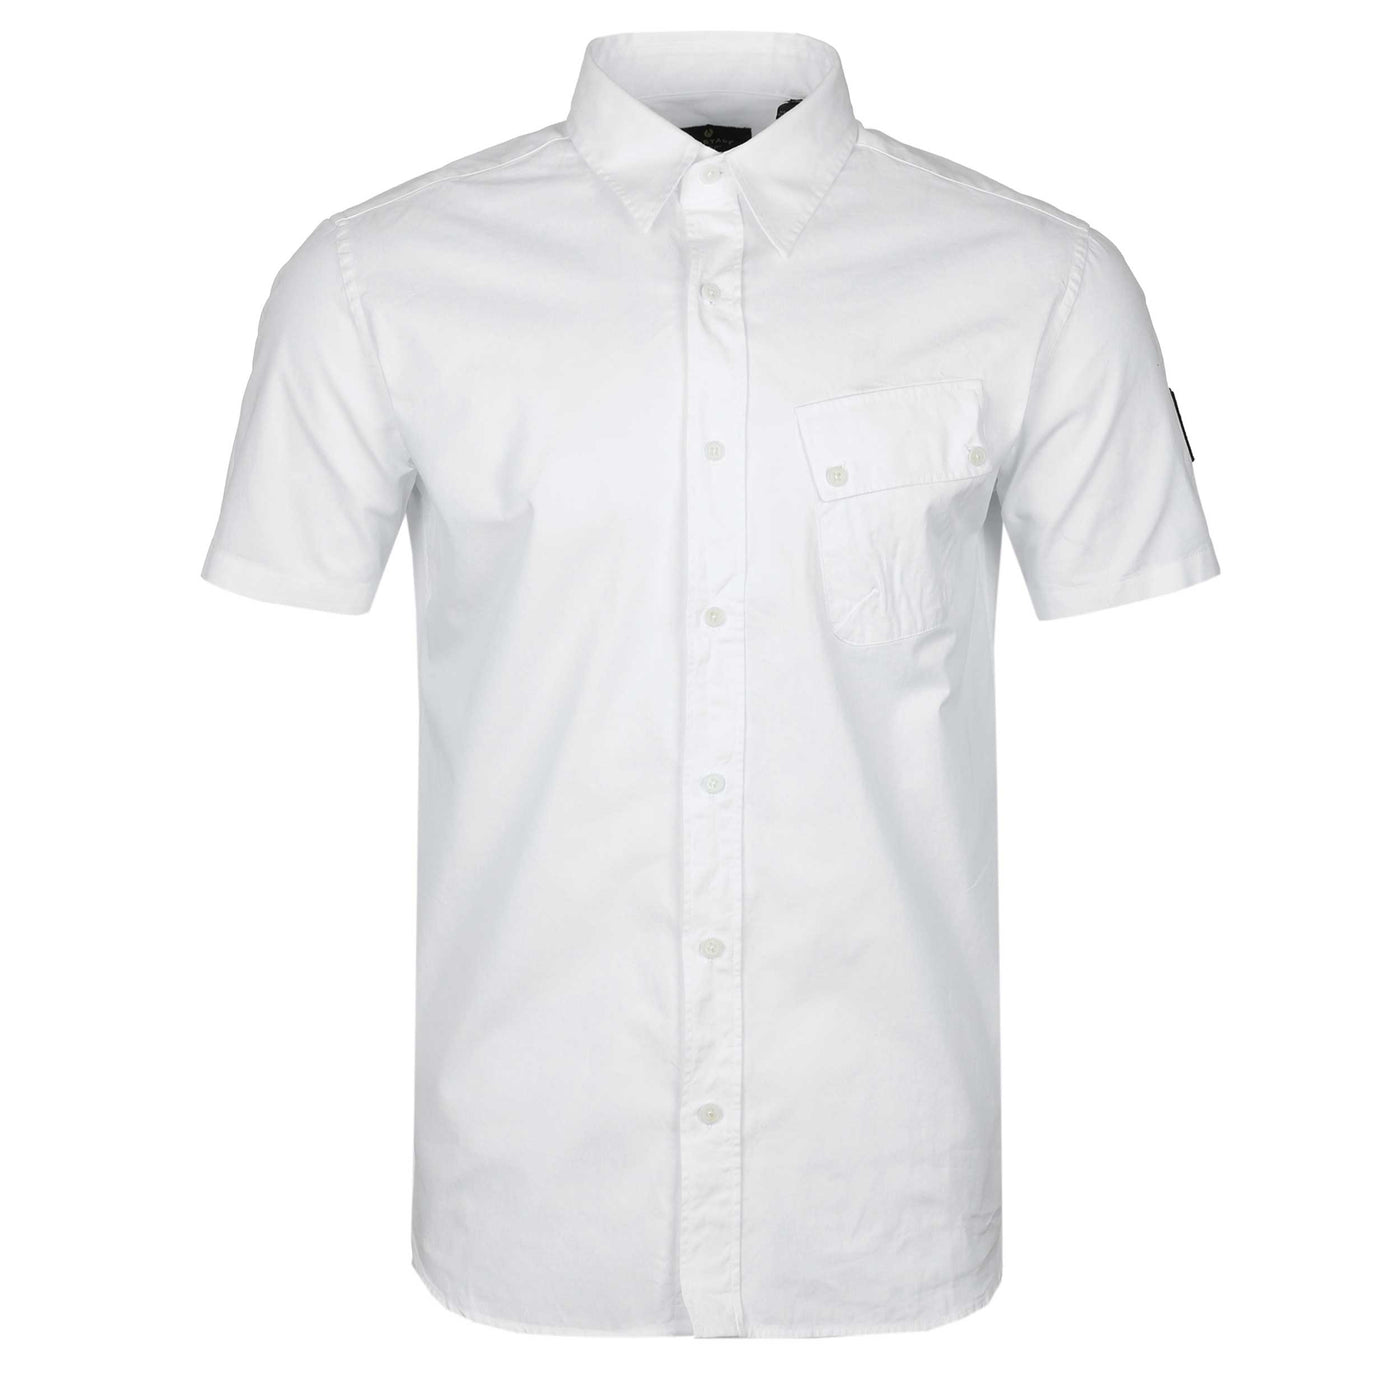 Belstaff SS Pitch Shirt in White